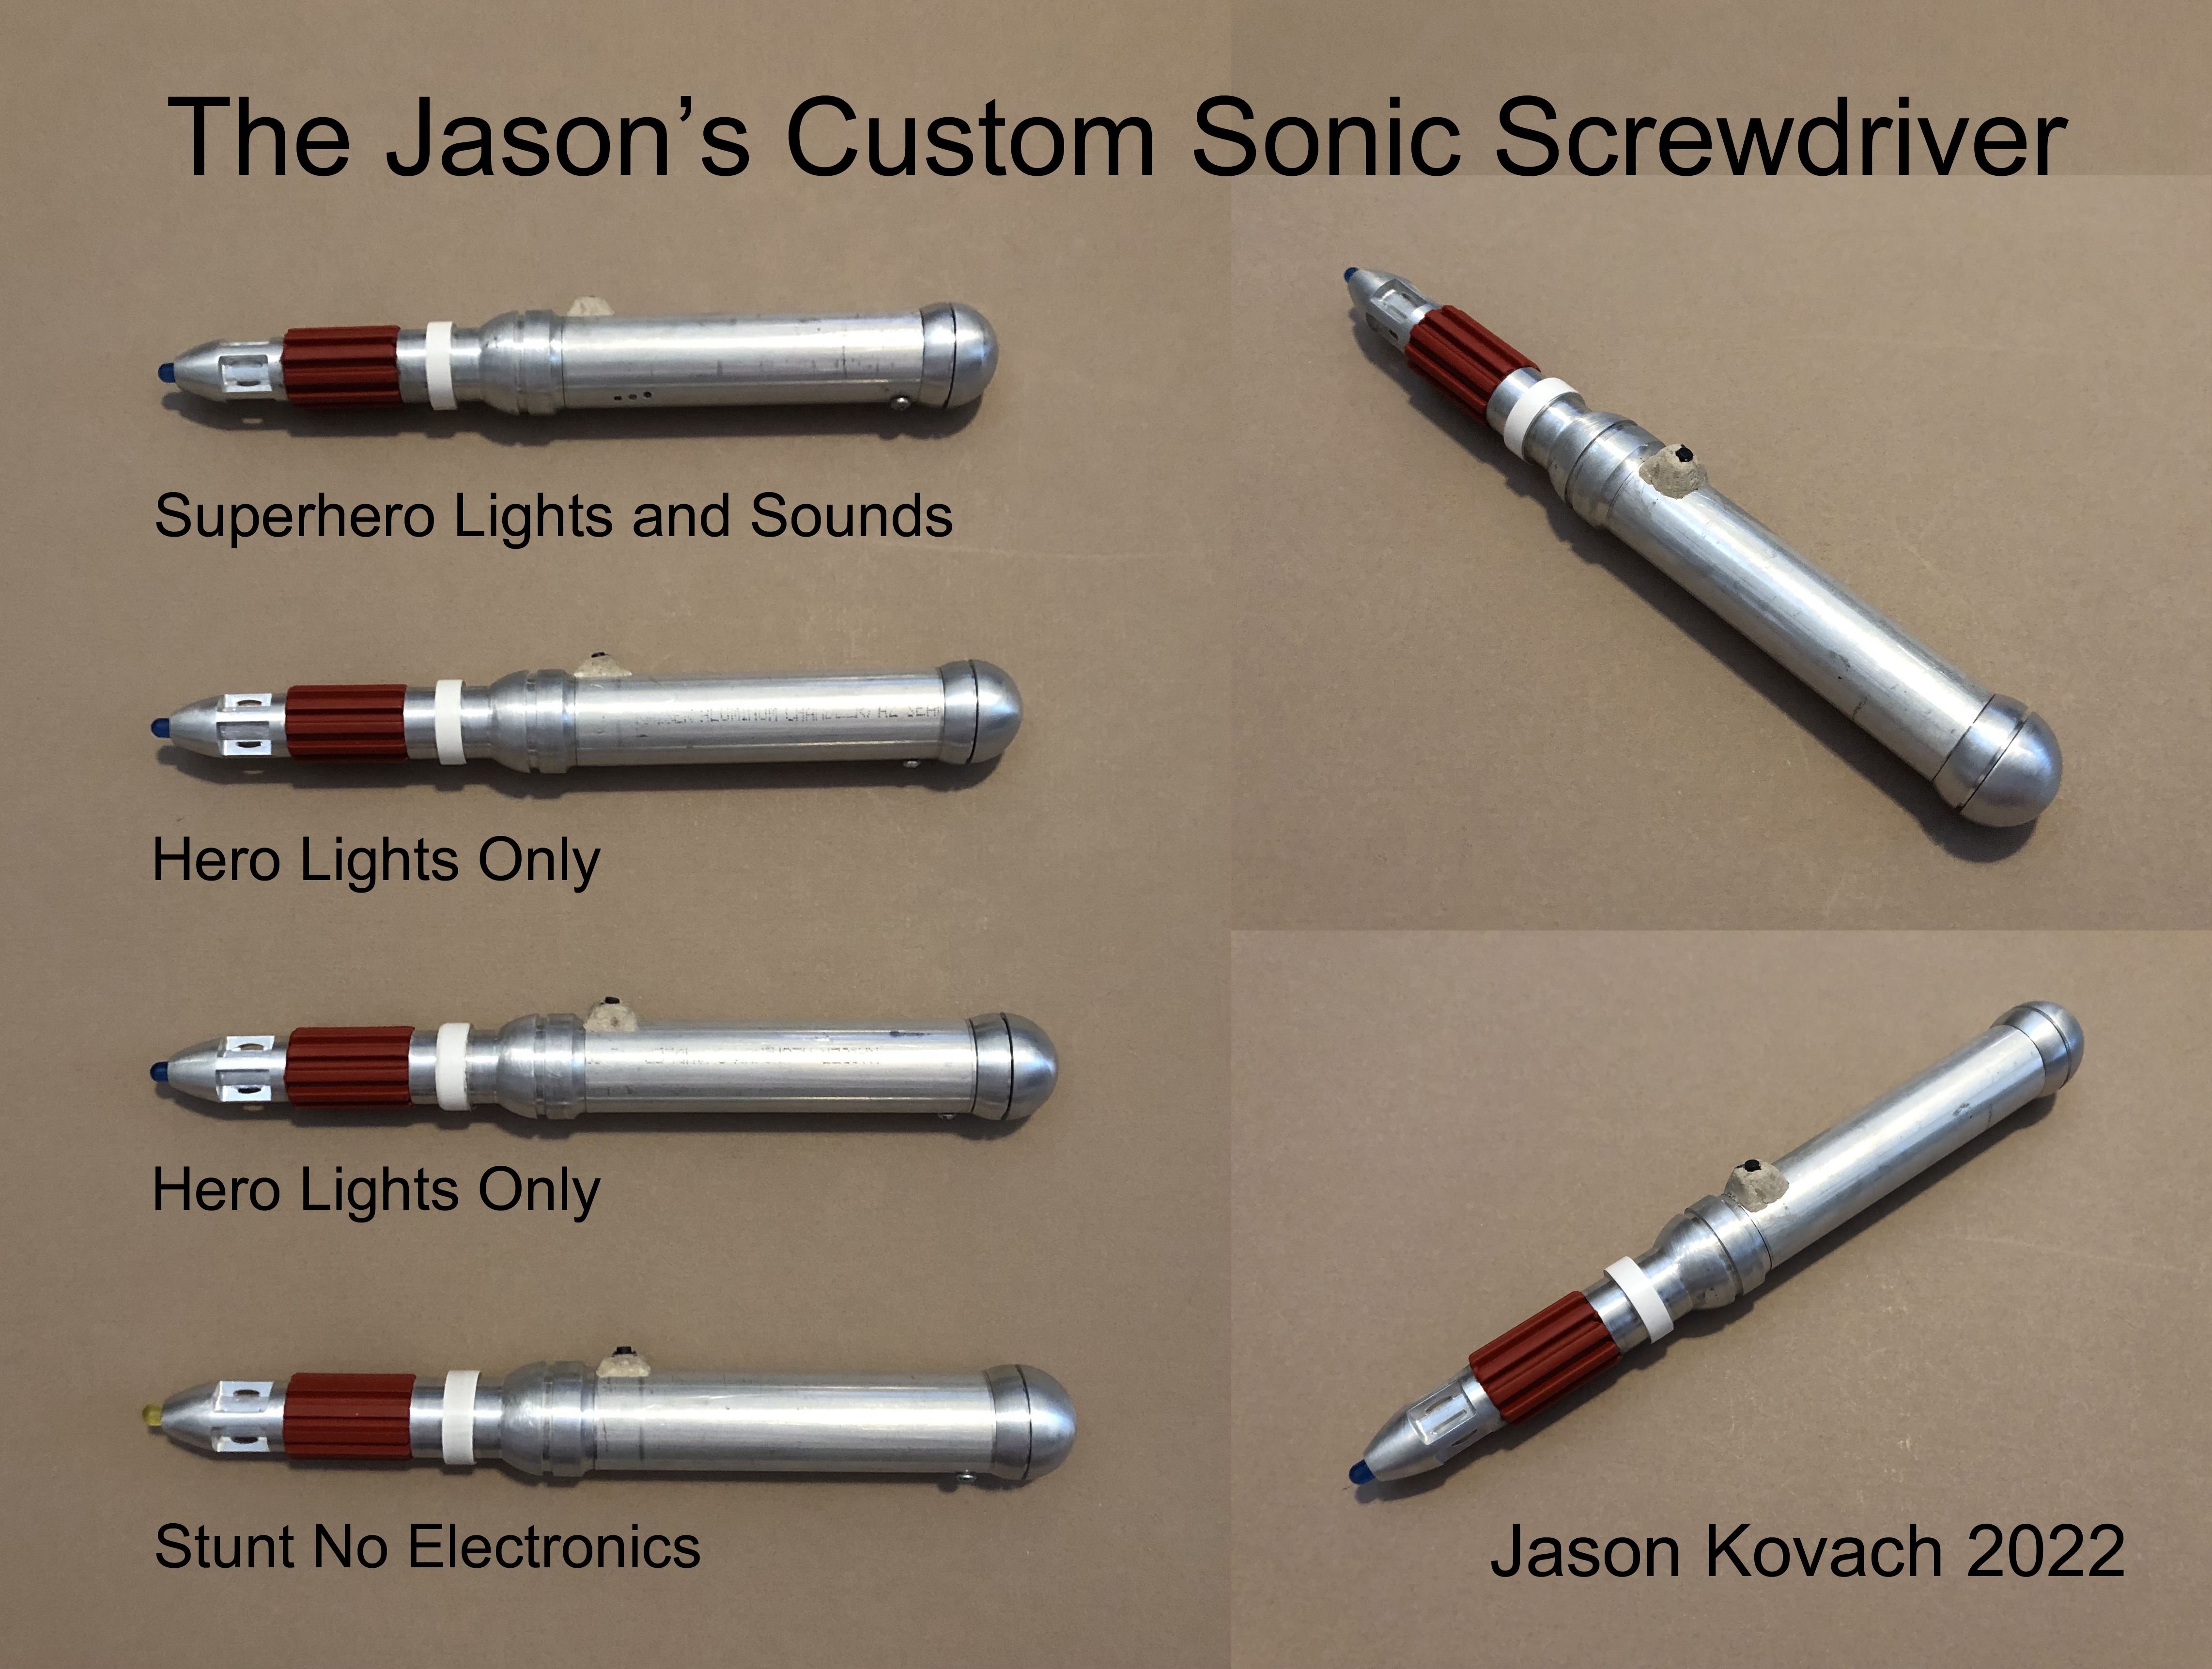 The Jason's Sonic Screwdriver 2022.jpg